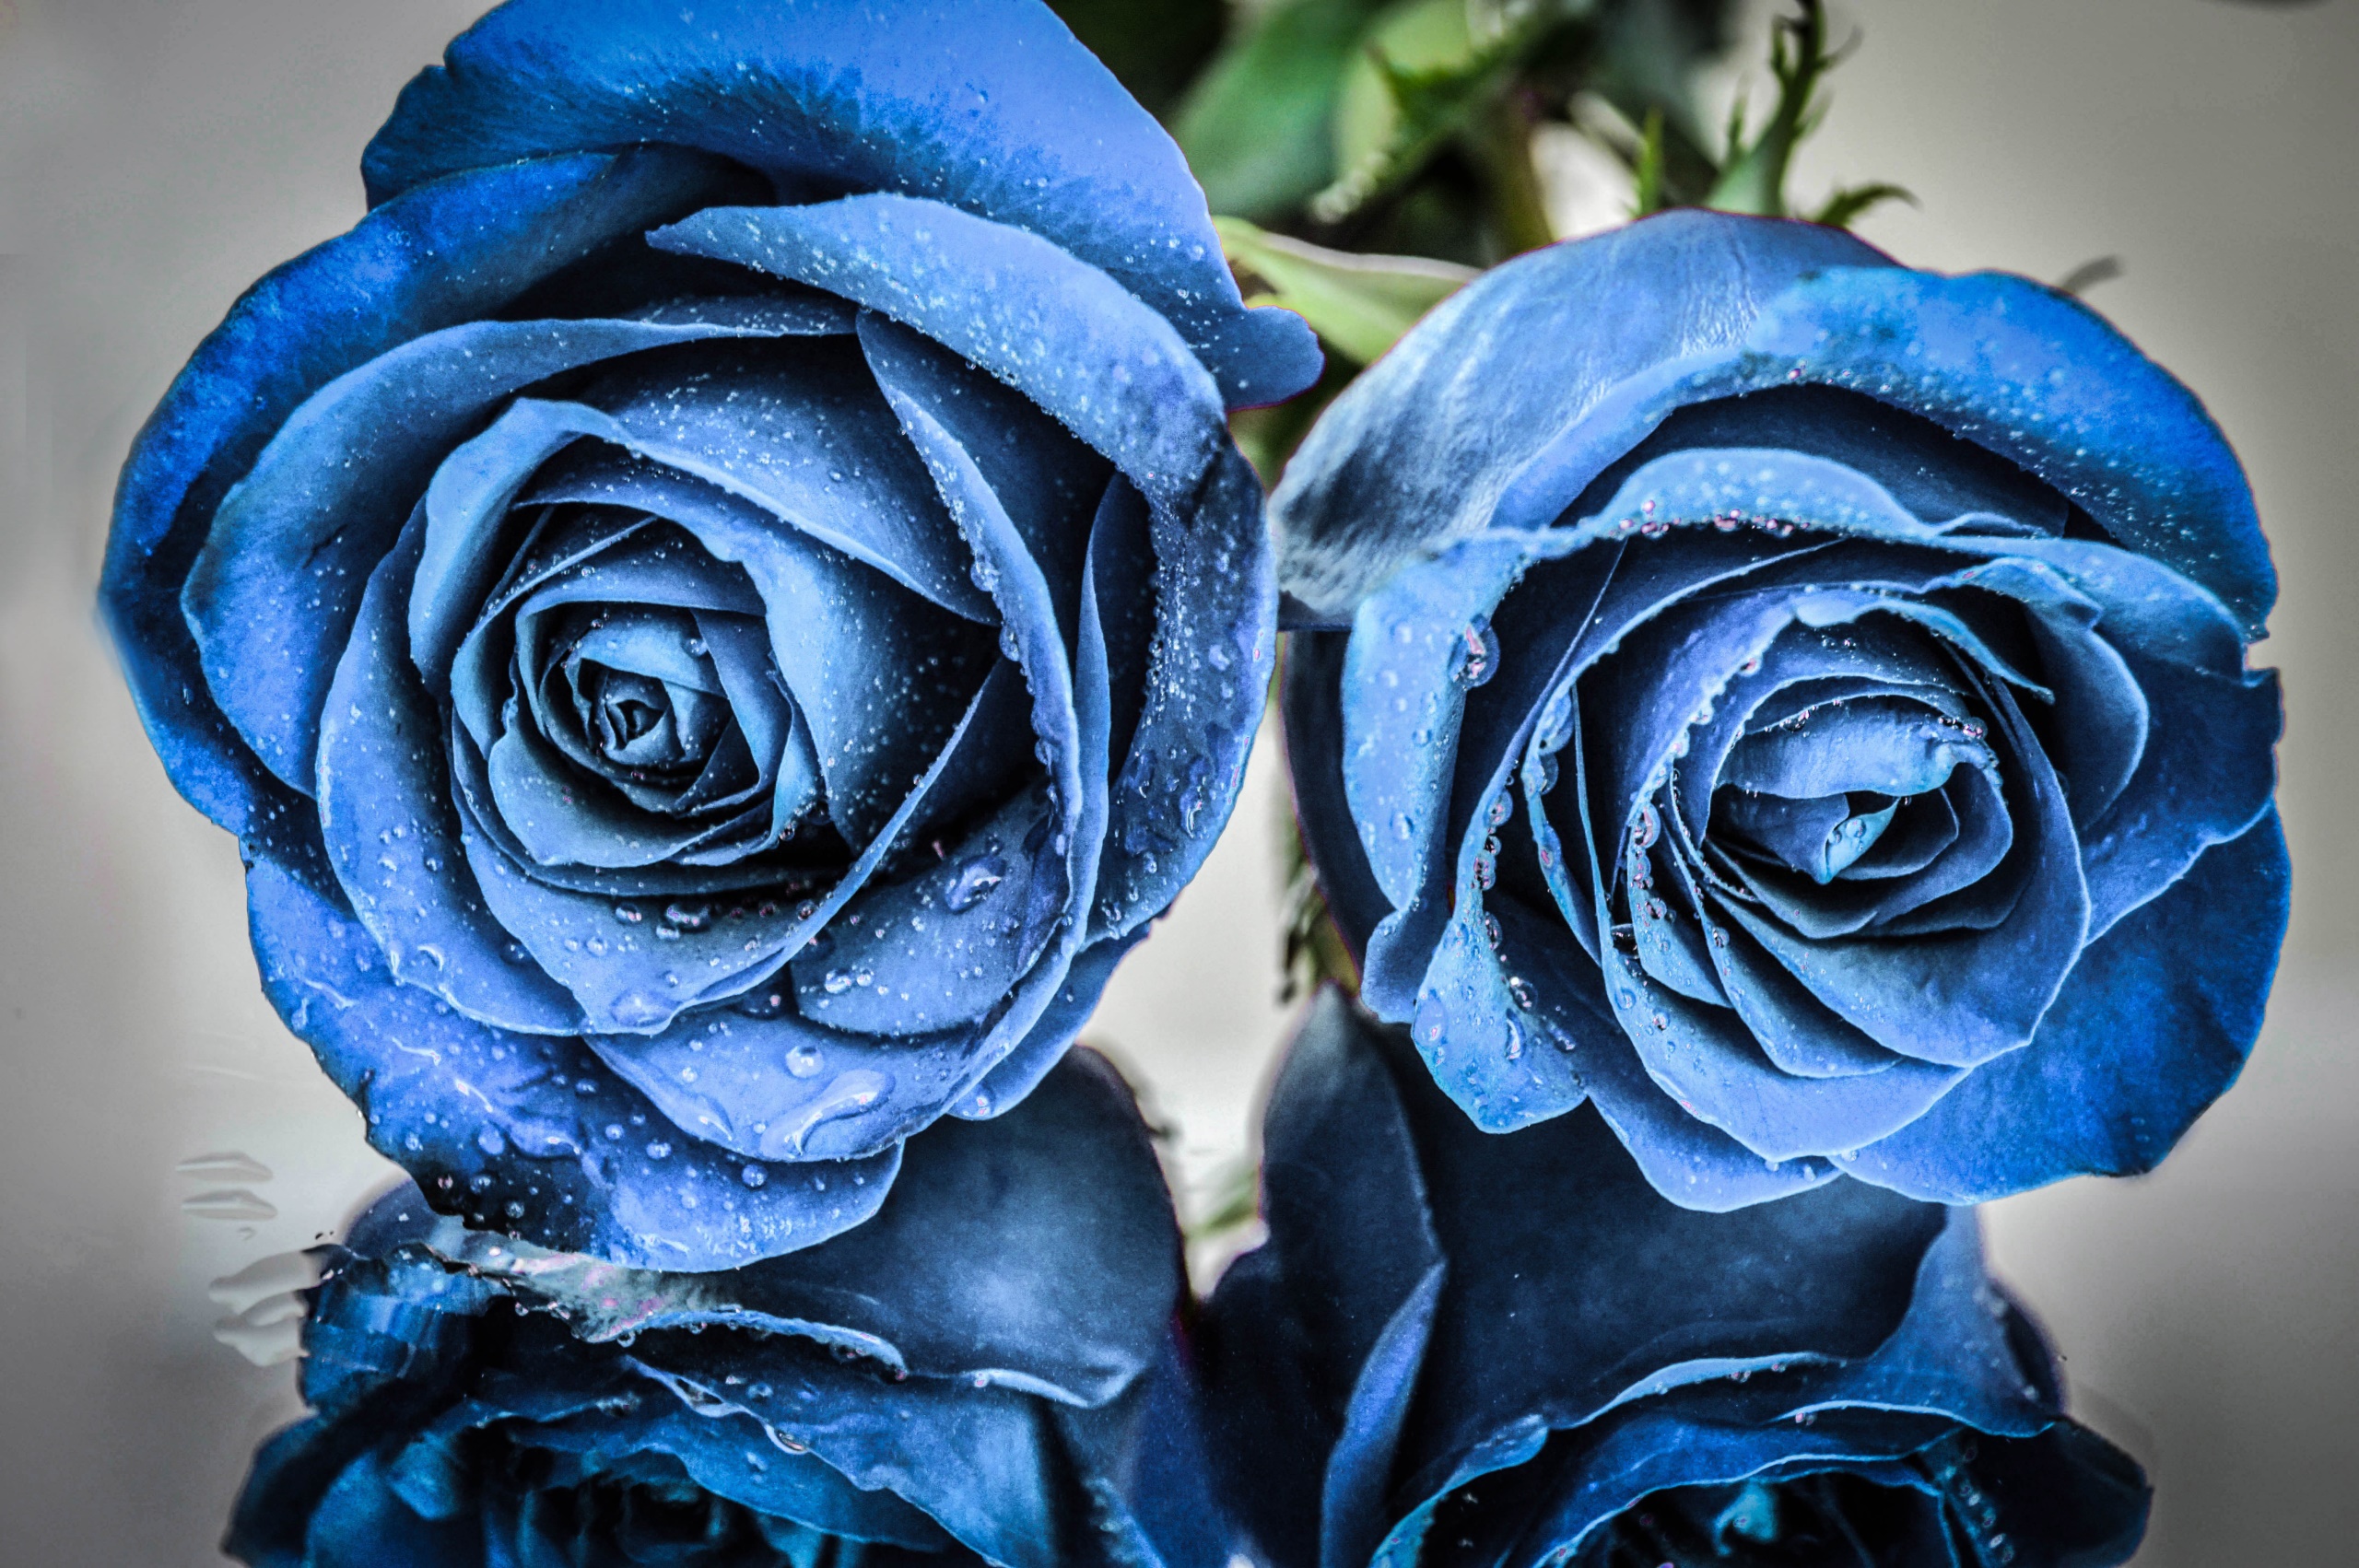 General 2560x1702 blue flowers rose plants flowers water drops closeup